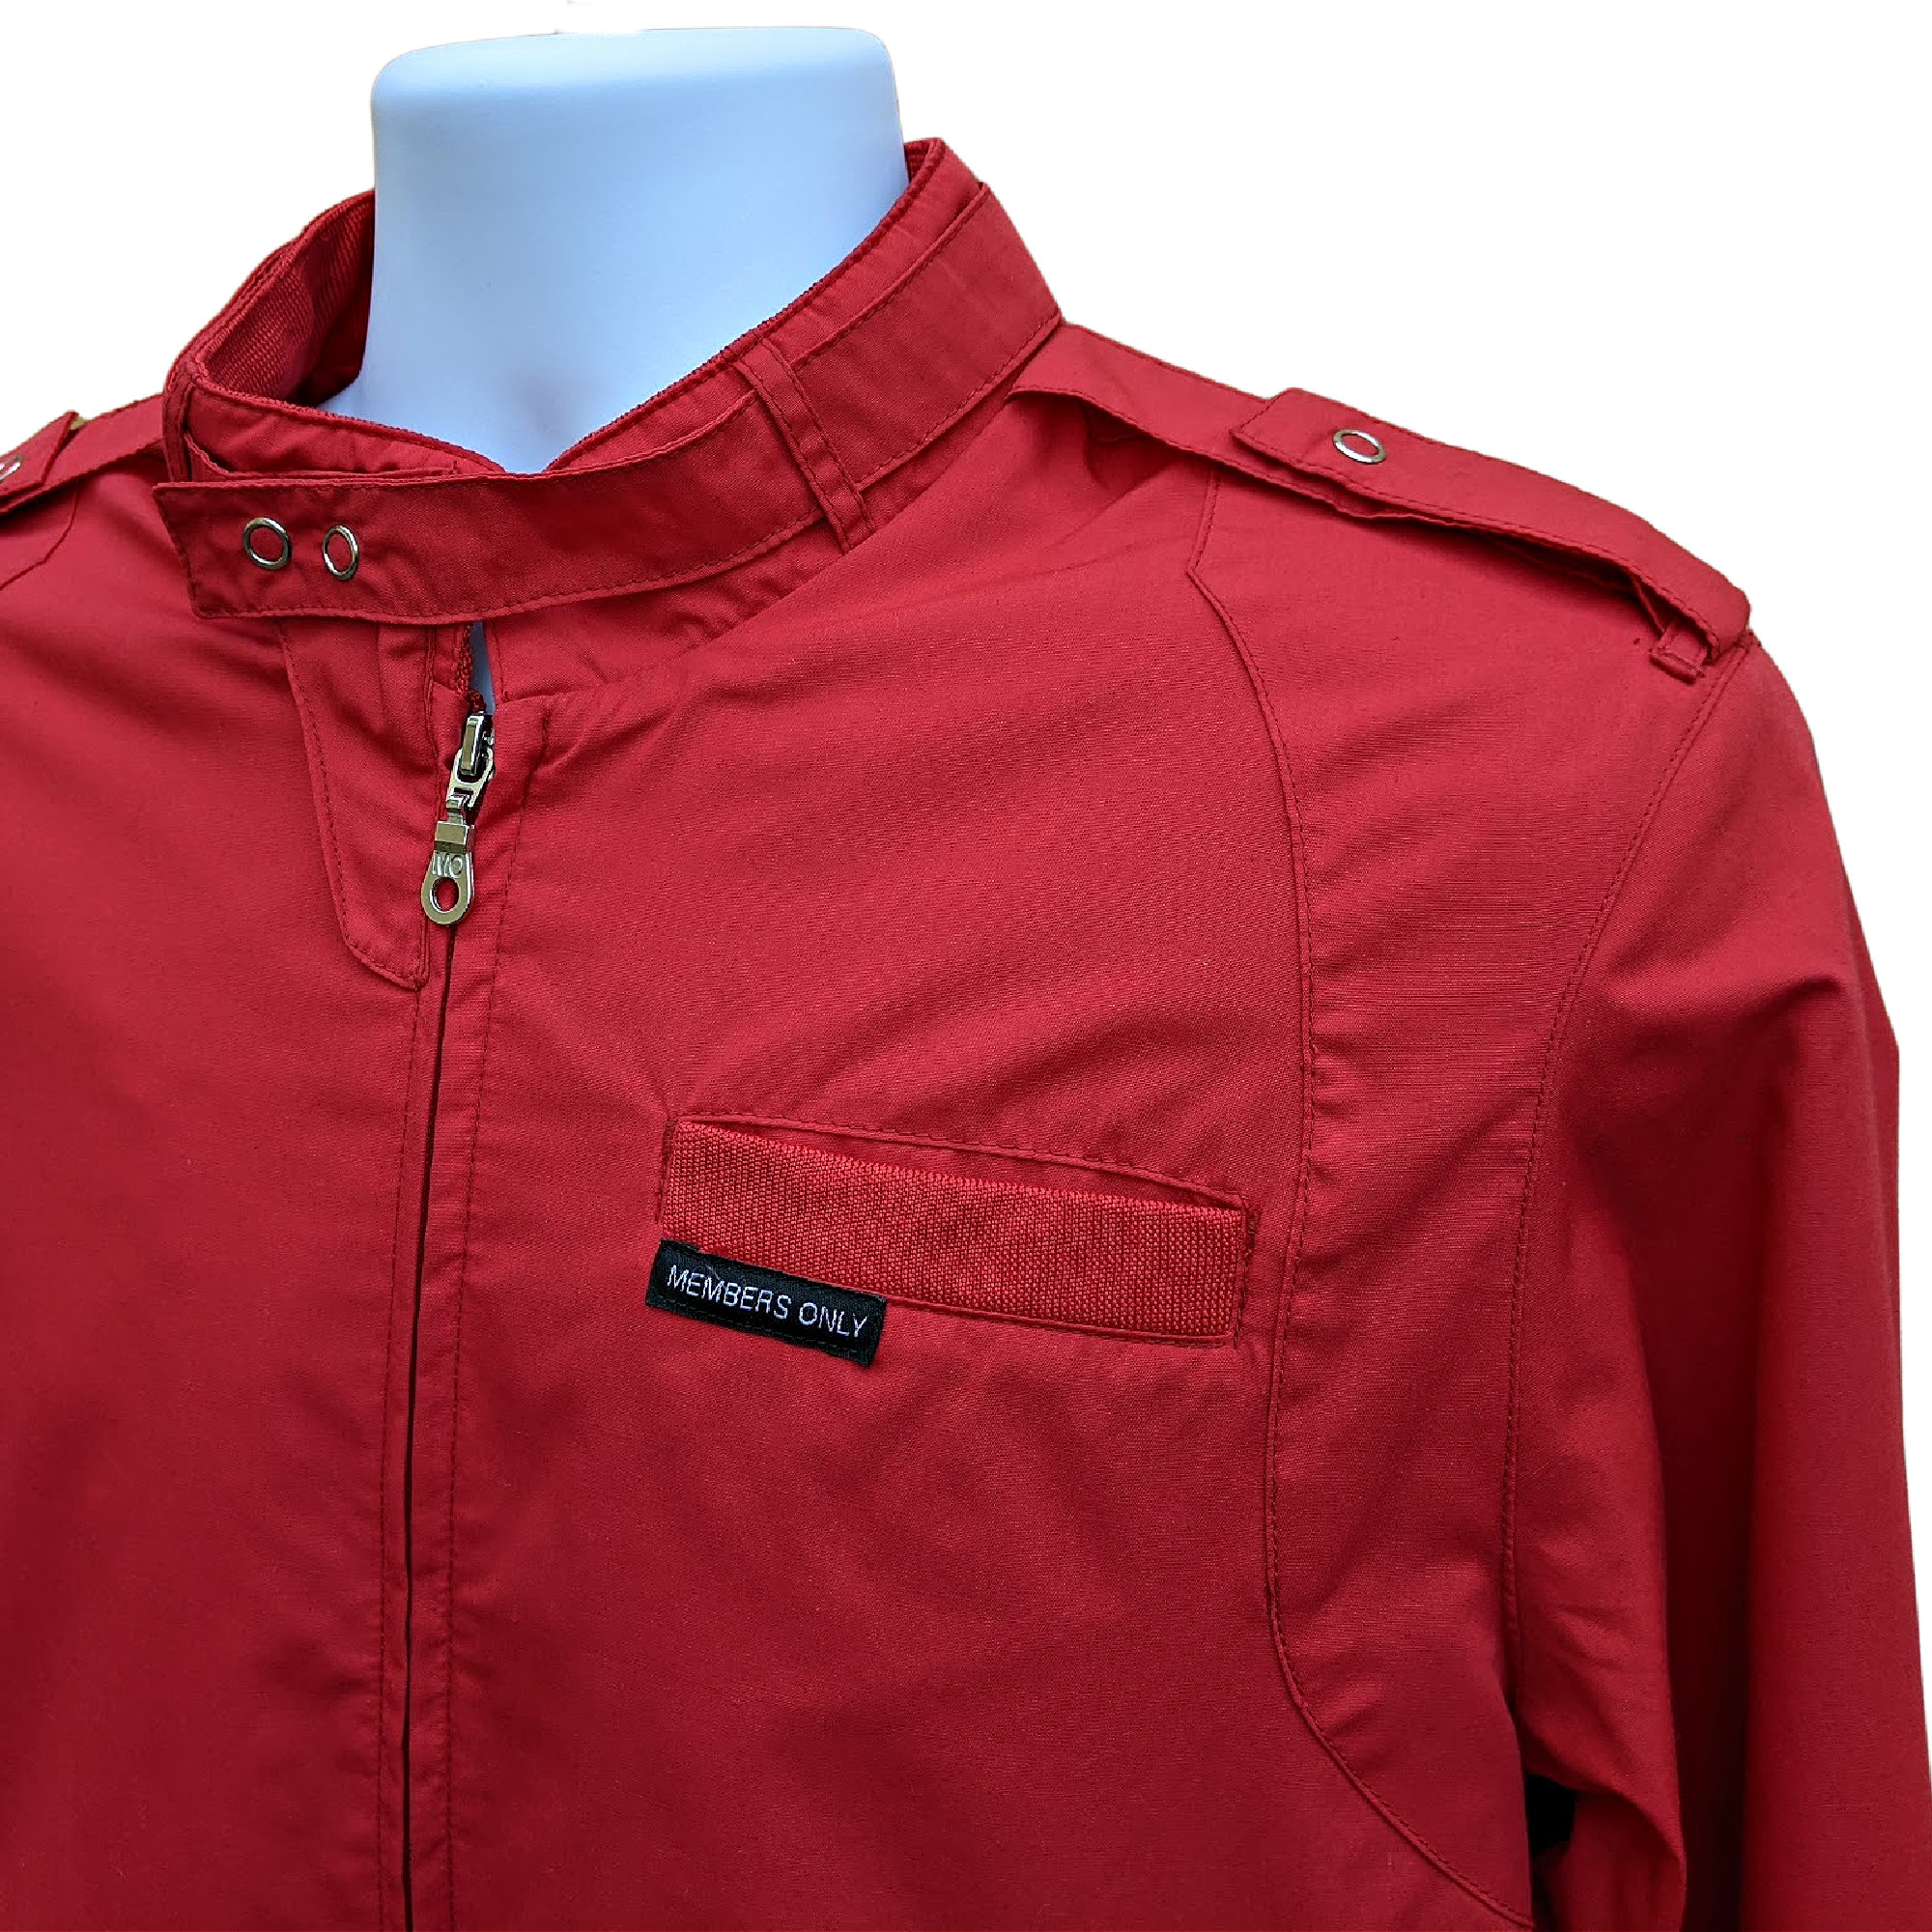 Vintage Cherry Red Members Only Jacket — Too Hot Vintage